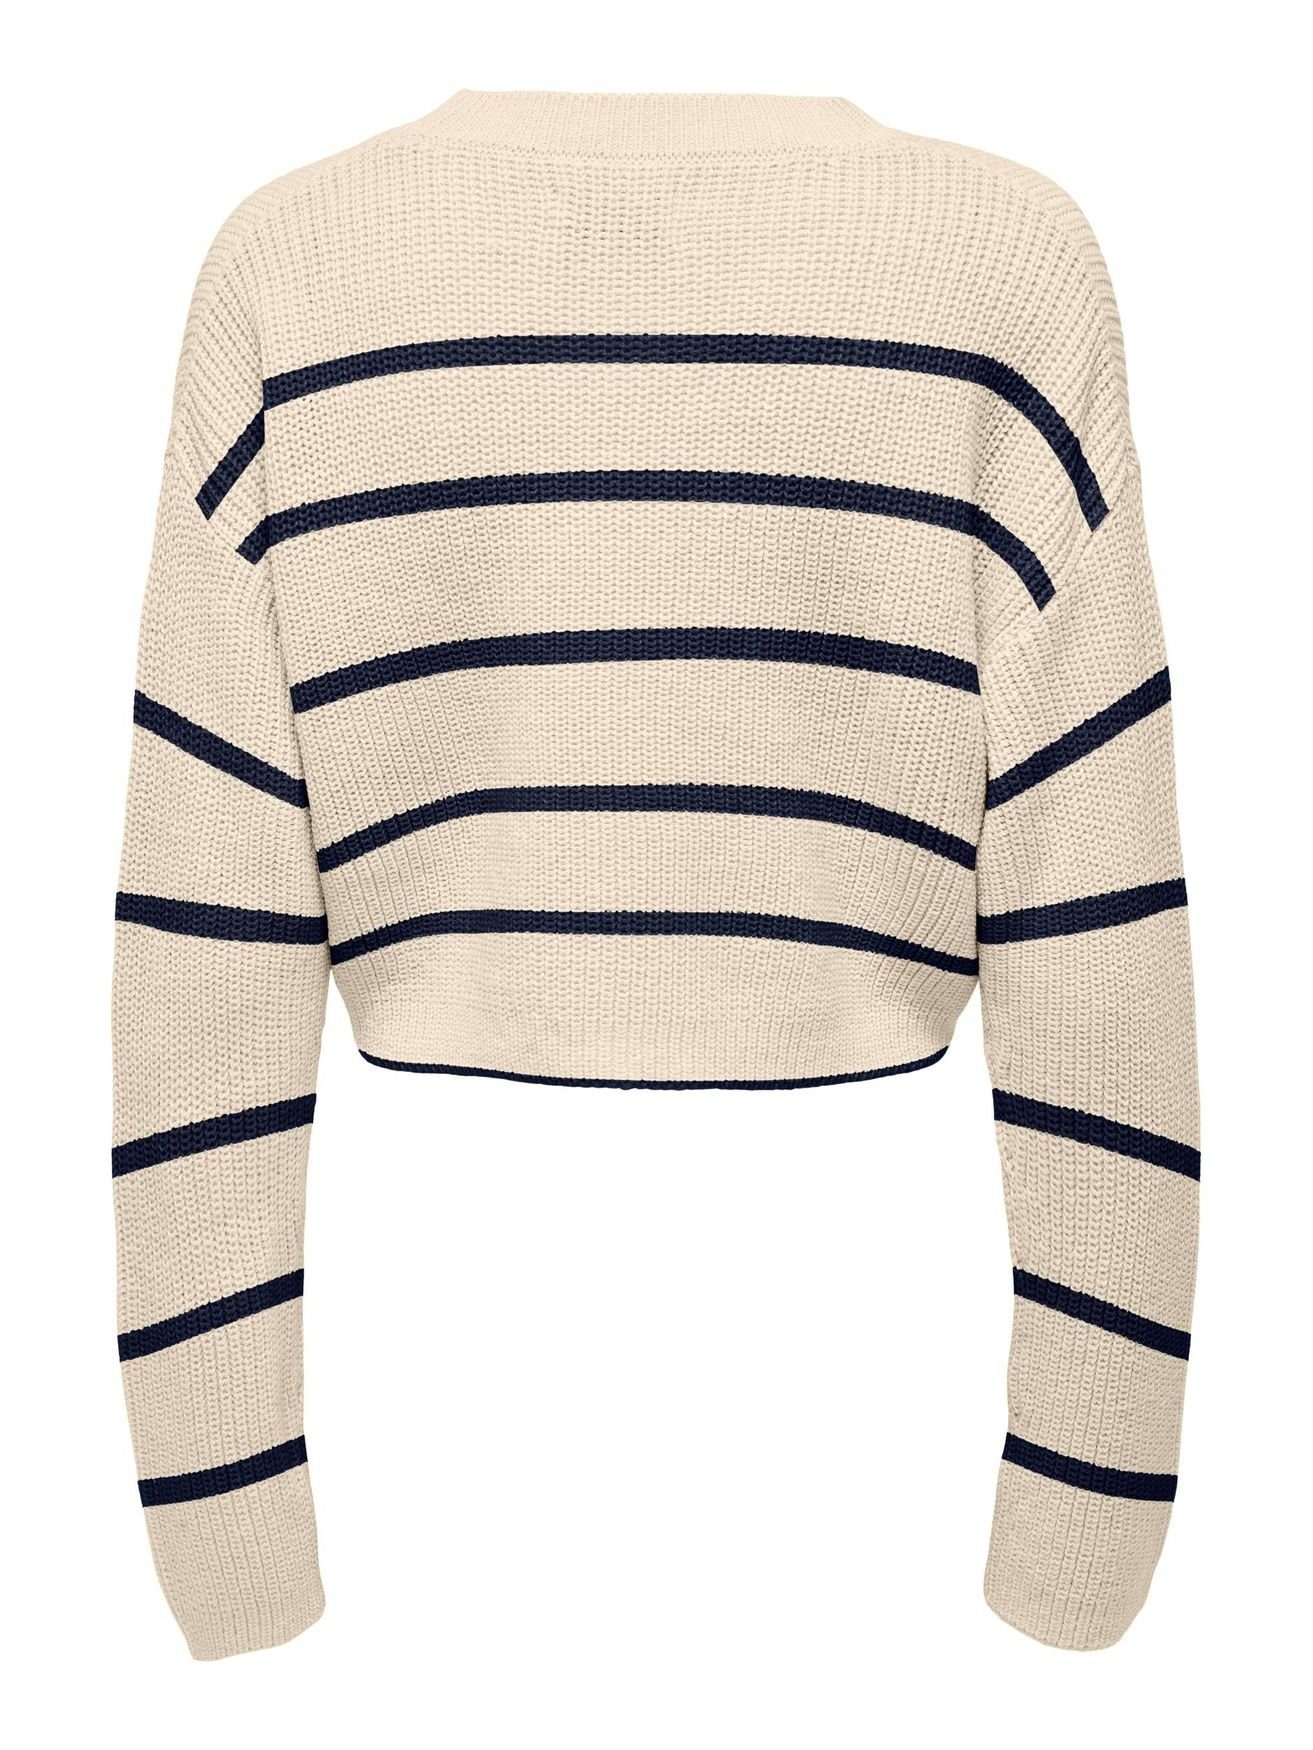 Pullover in Langarm ONLMALAVI Sweater Cropped Strickpullover 4579 ONLY Beige-2 Rippstrick Kurzer